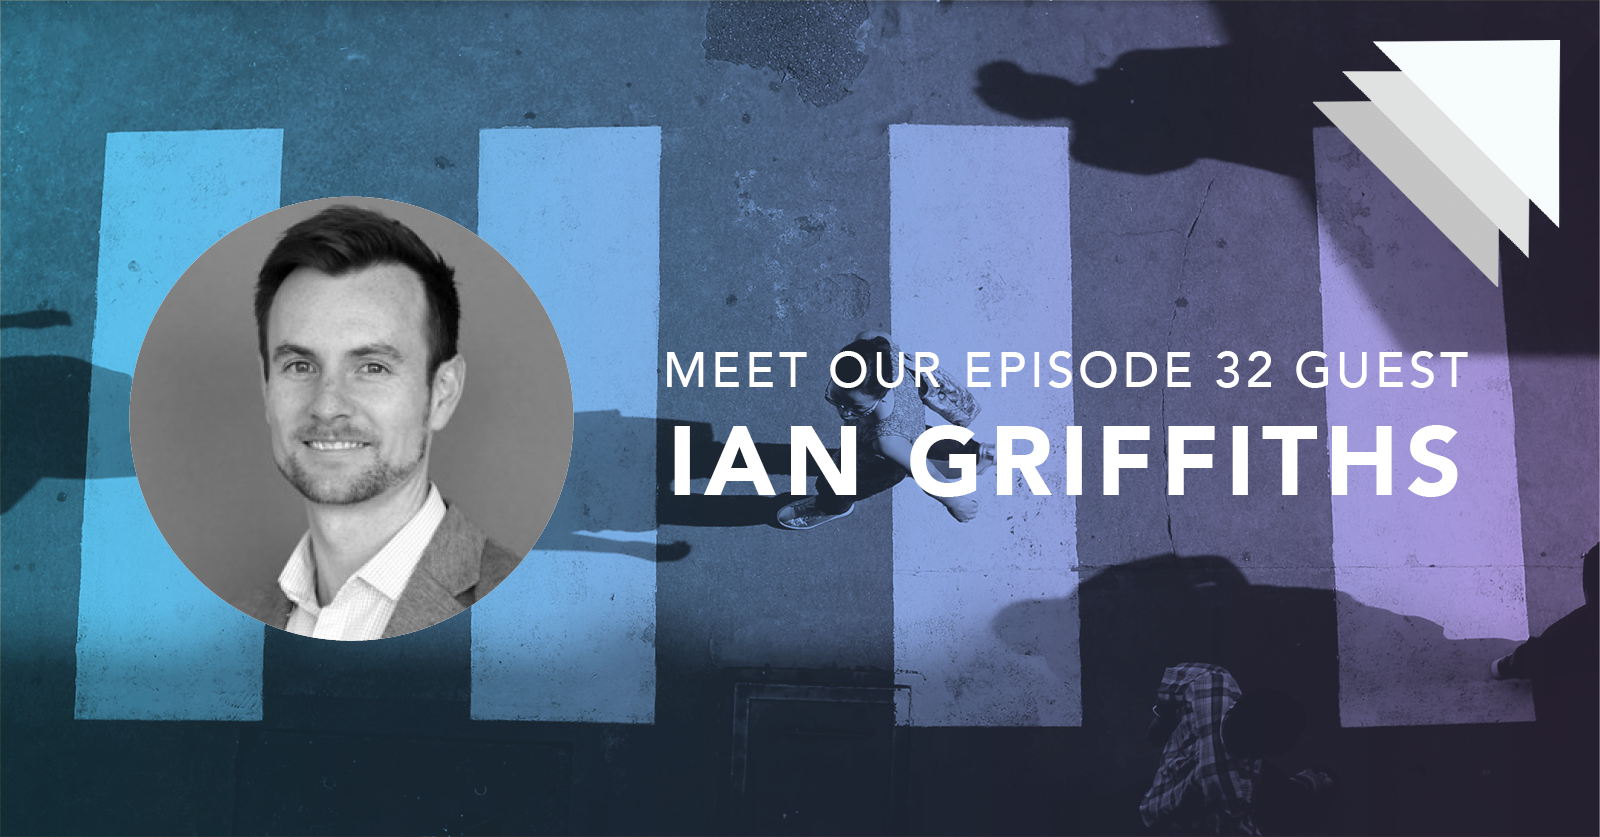 Meet our episode 32 guest Ian Griffiths